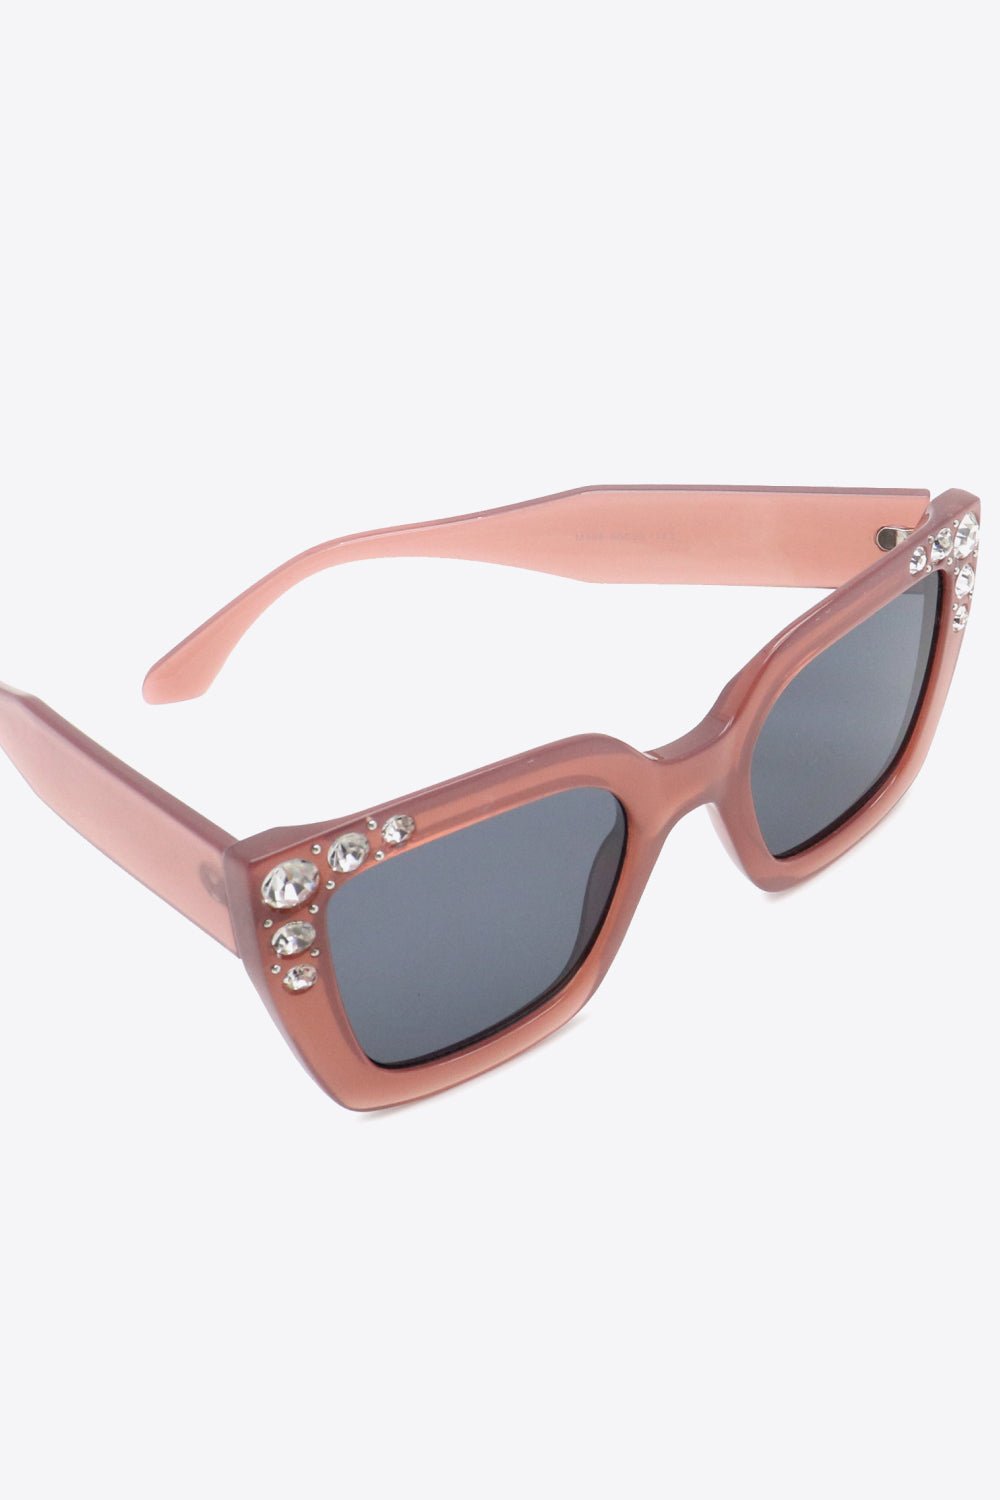 Inlaid Rhinestone Polycarbonate Sunglasses - BEAUTY COSMOTICS SHOP